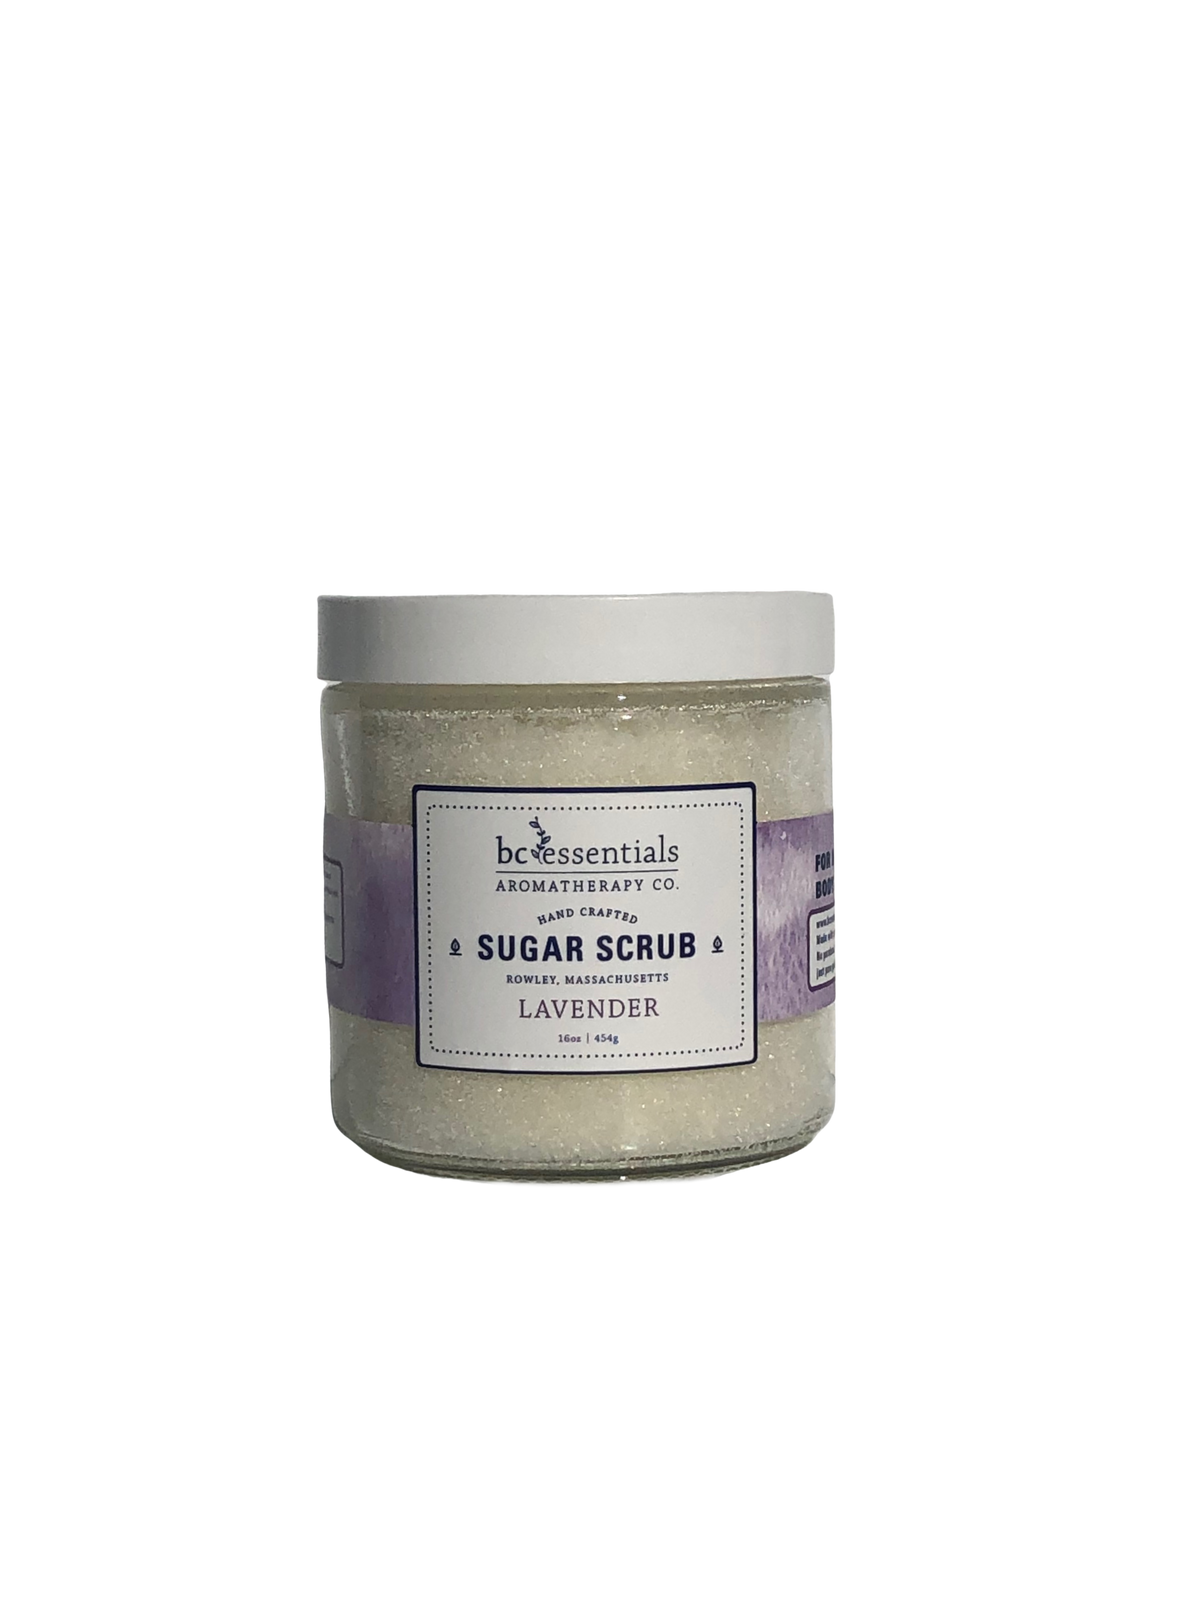 A jar of BC Essentials lavender sugar scrub - 16 oz, against a solid gray background. The jar is clear with a silver cap, displaying the light purple scrub.